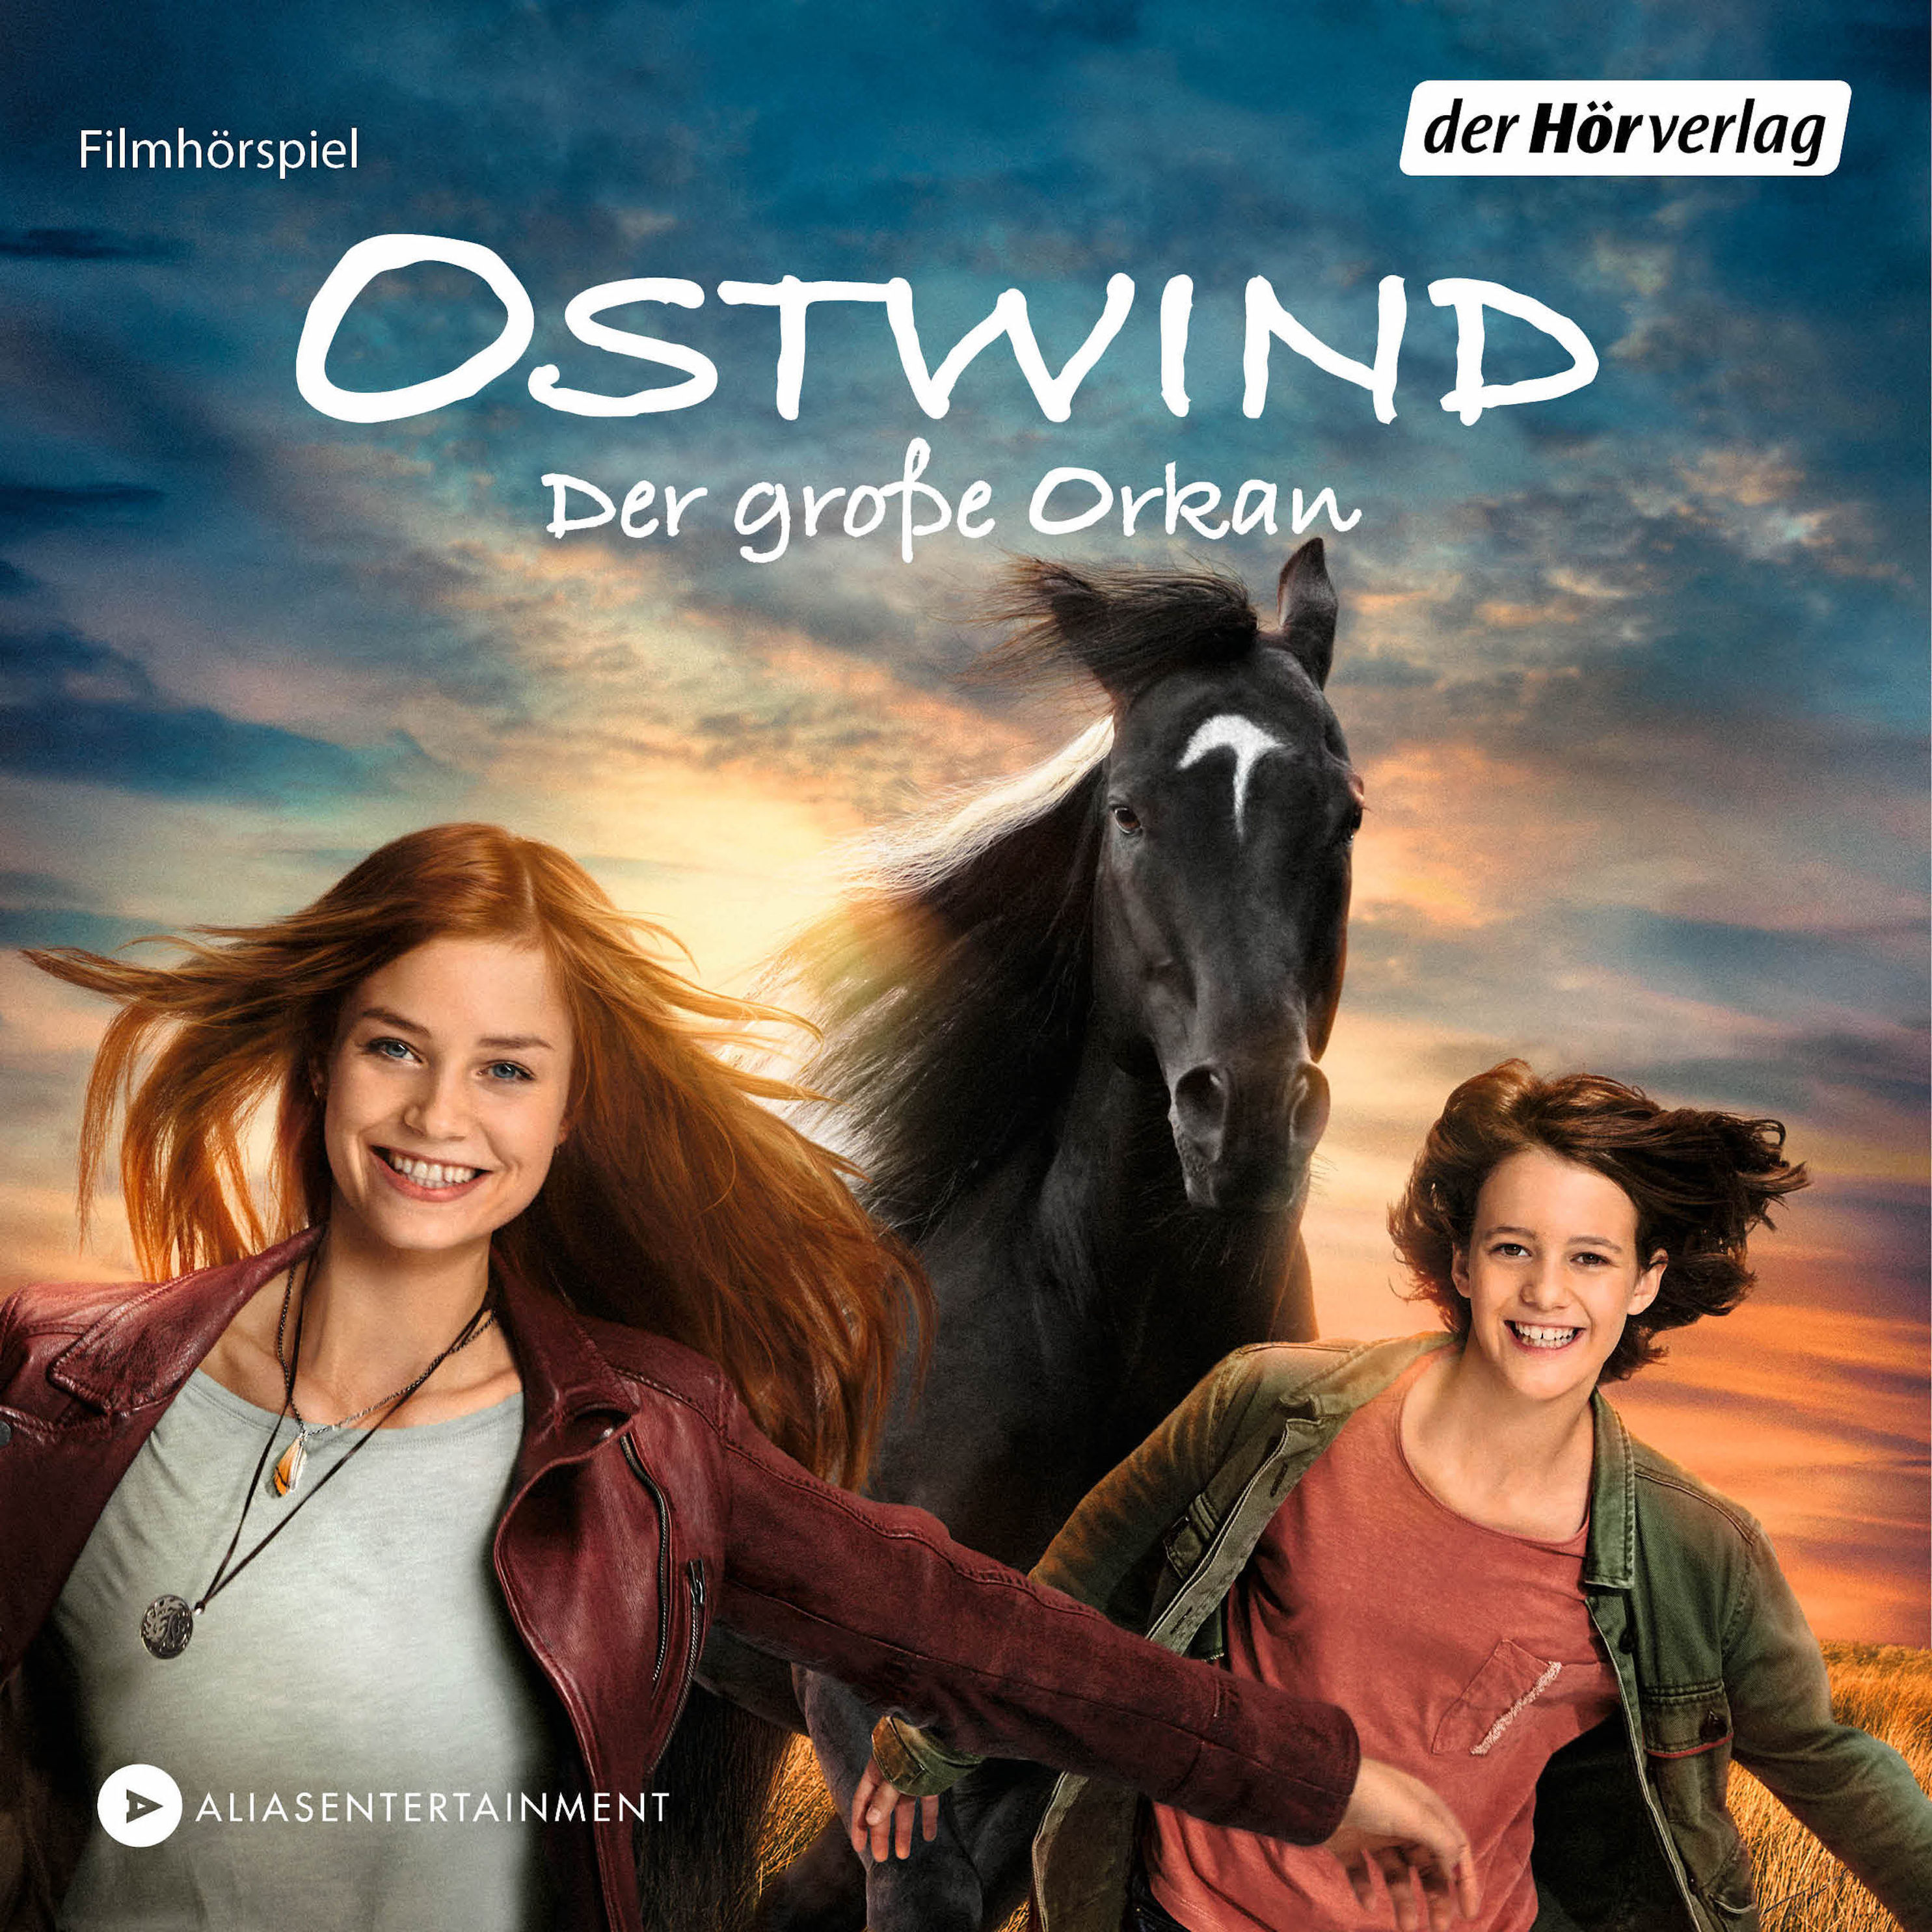 Ostwind - Die Filmhörspiele - 5 - Ostwind 5 Der große Orkan Hörbuch Download